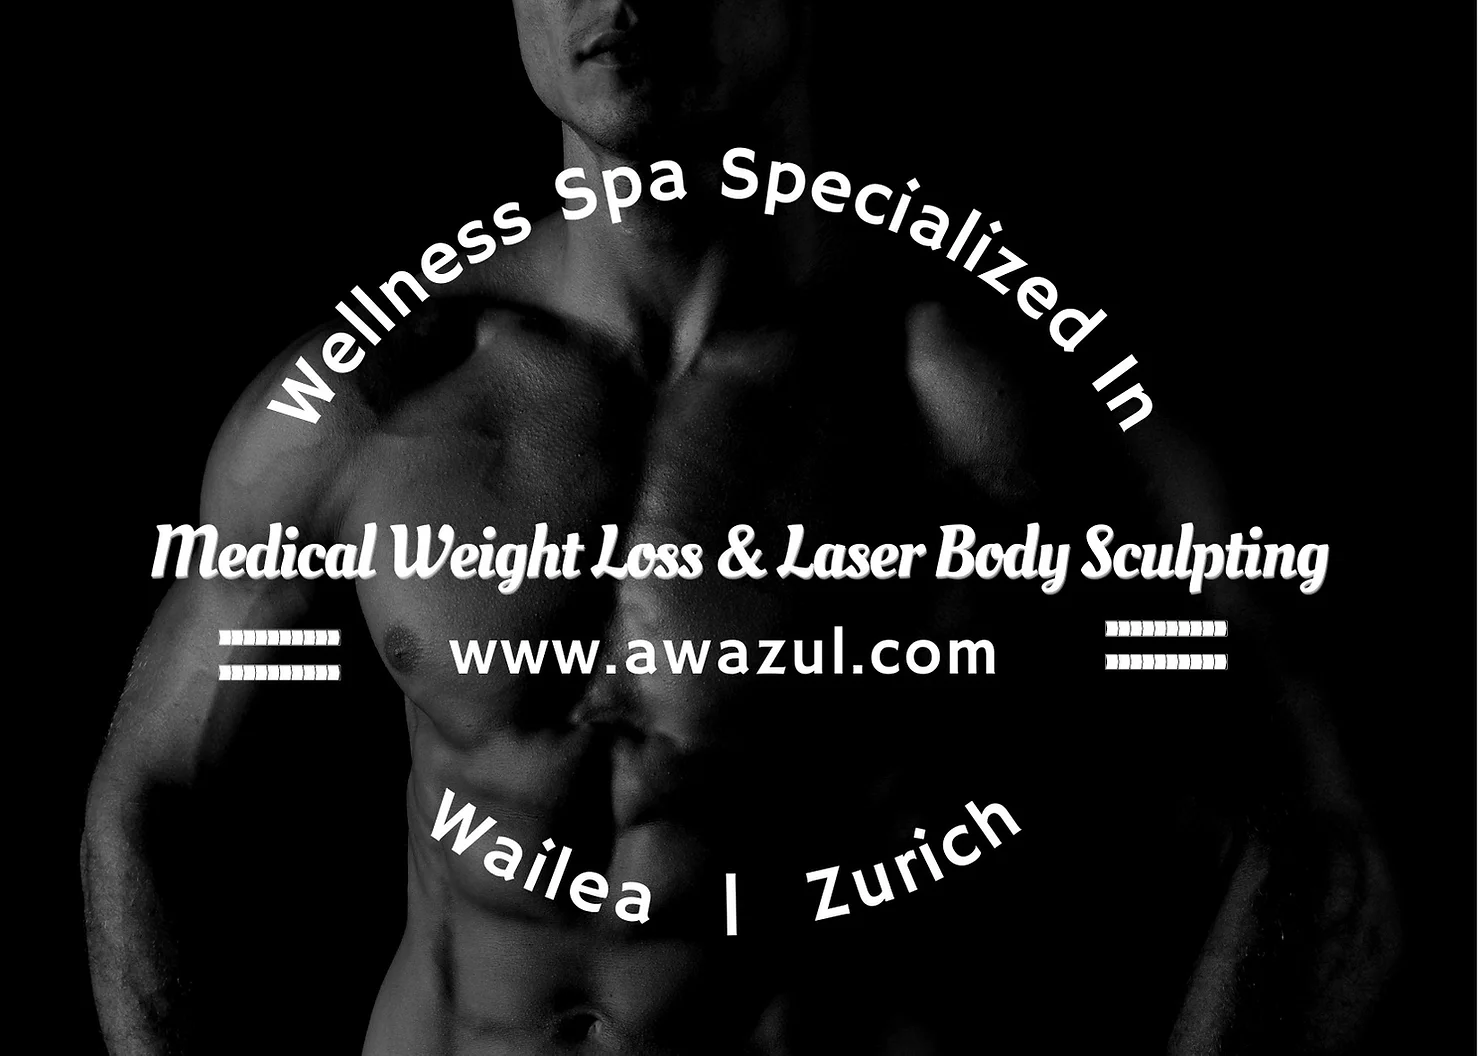 Awazul Wellness & Weight Loss banner about medical weight loss and laser body sculpting